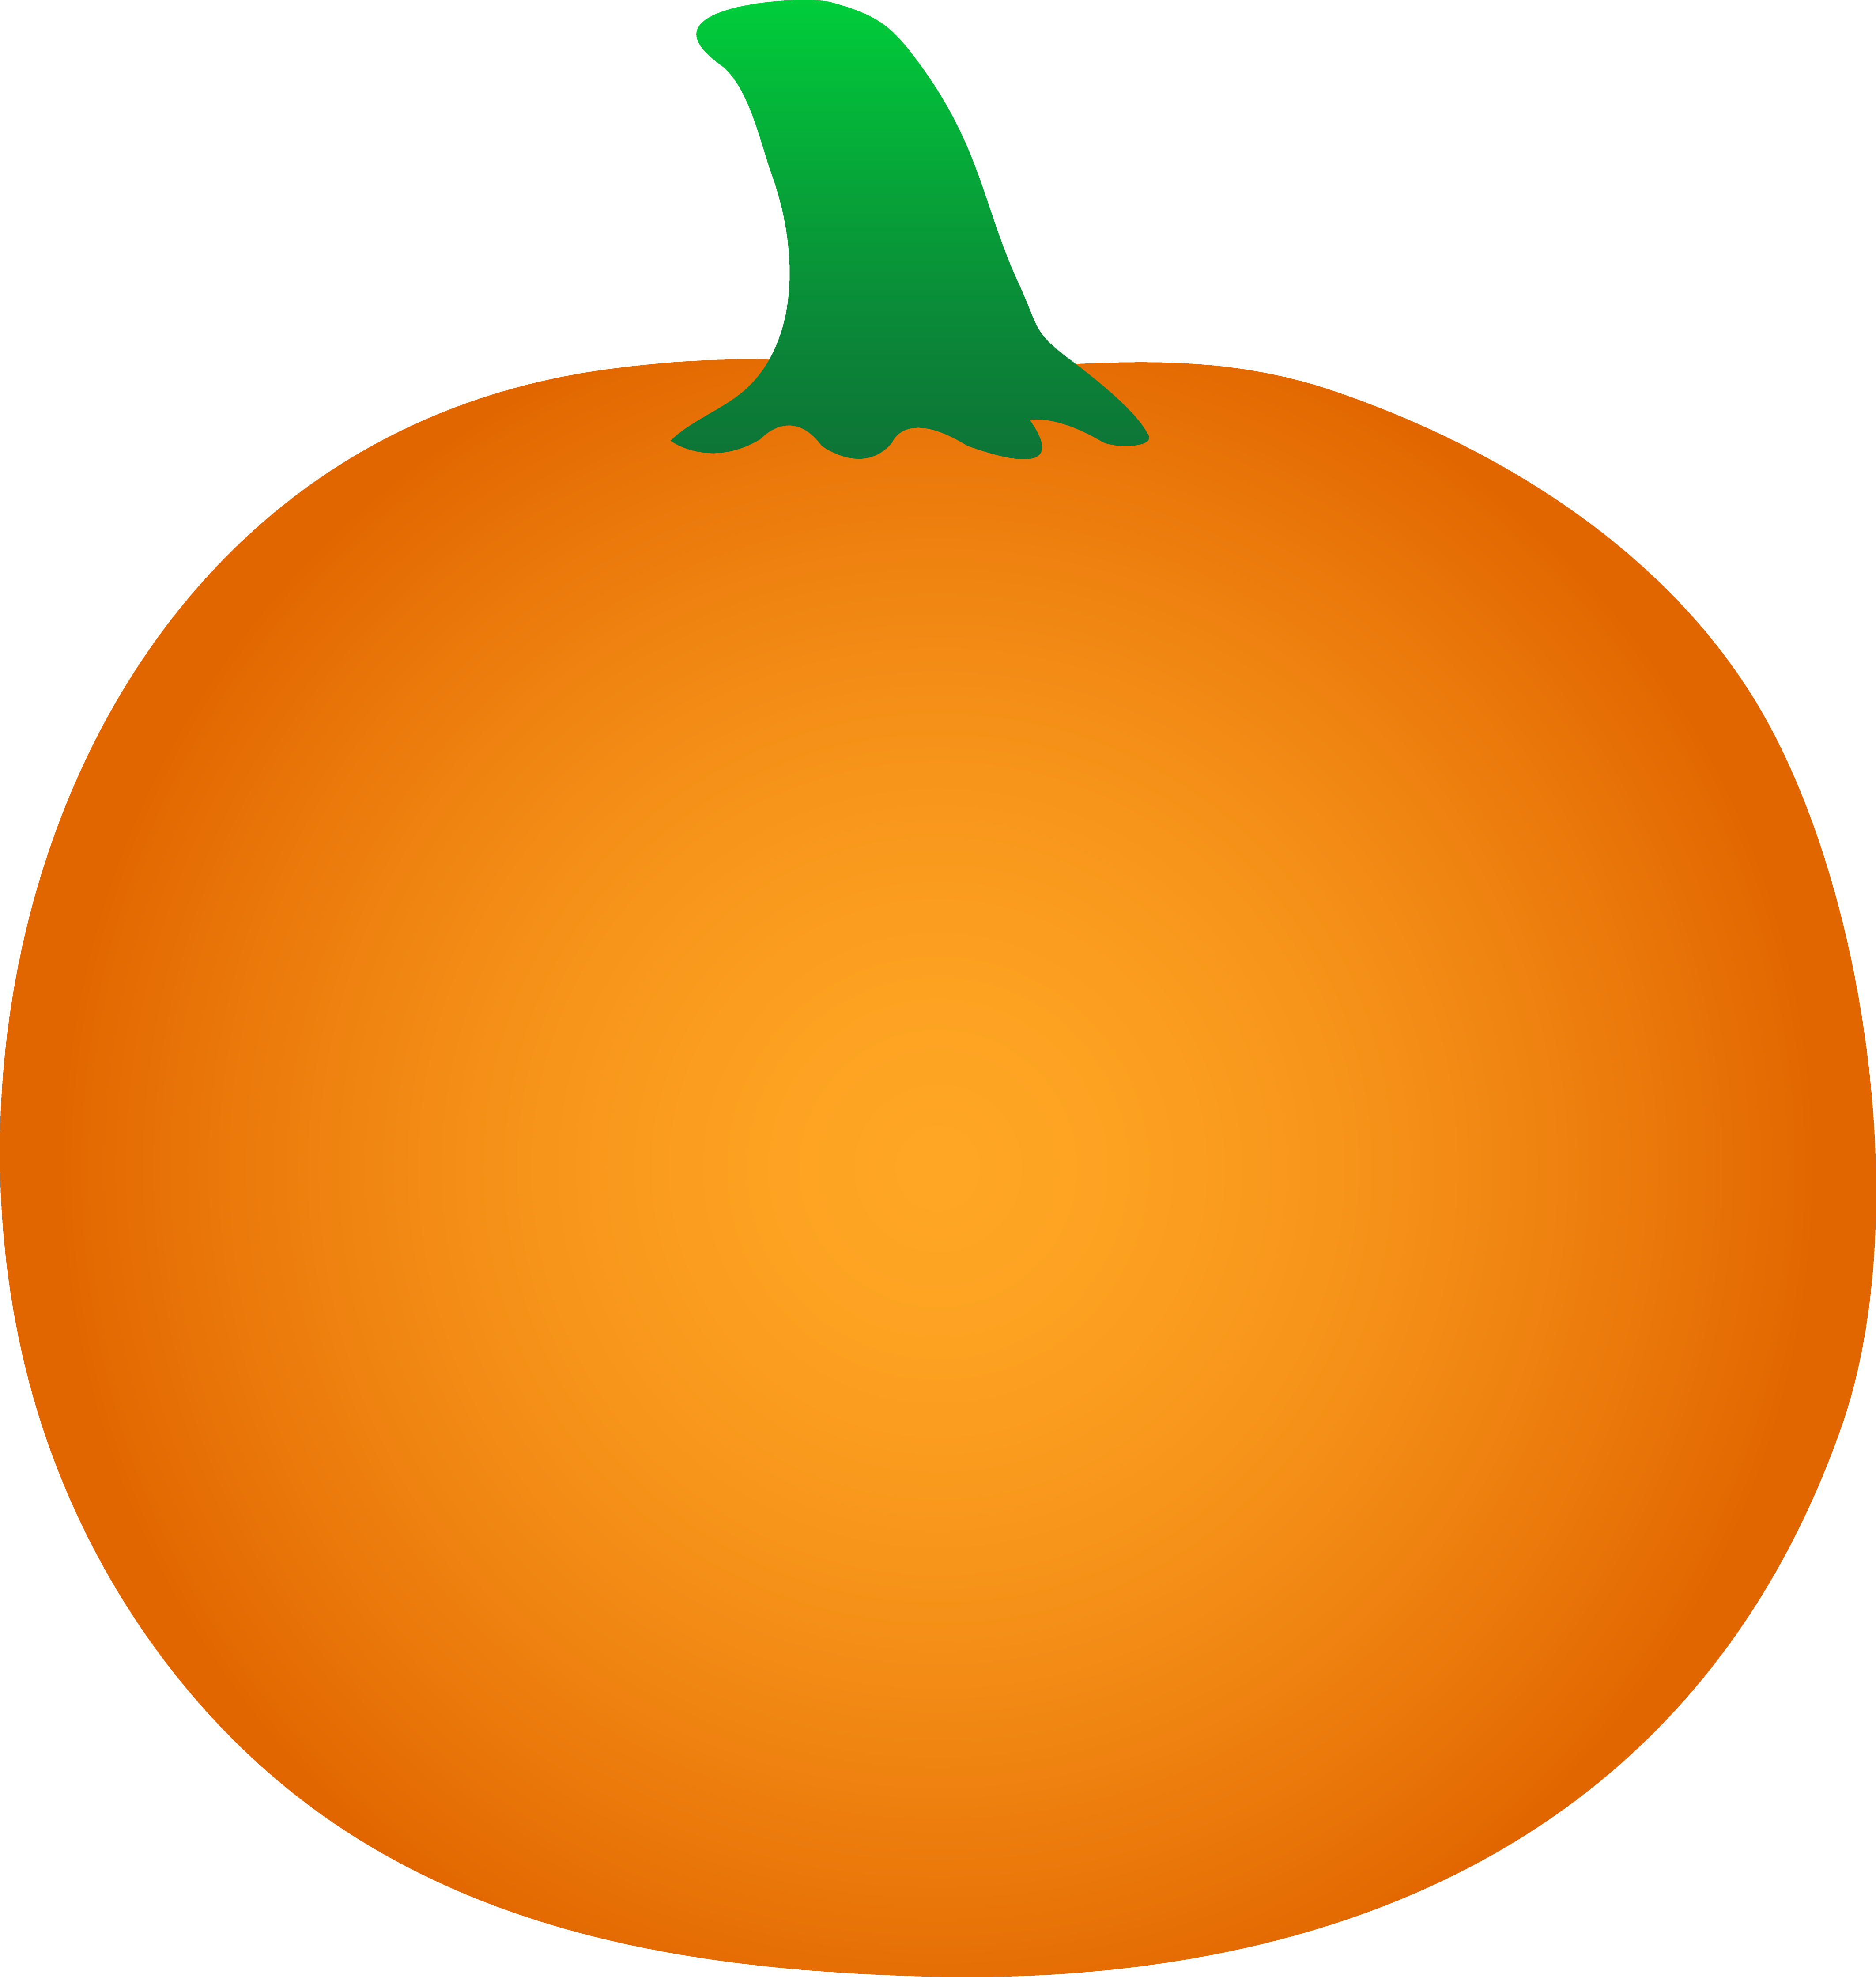 Cute Halloween Pumpkin Clip A